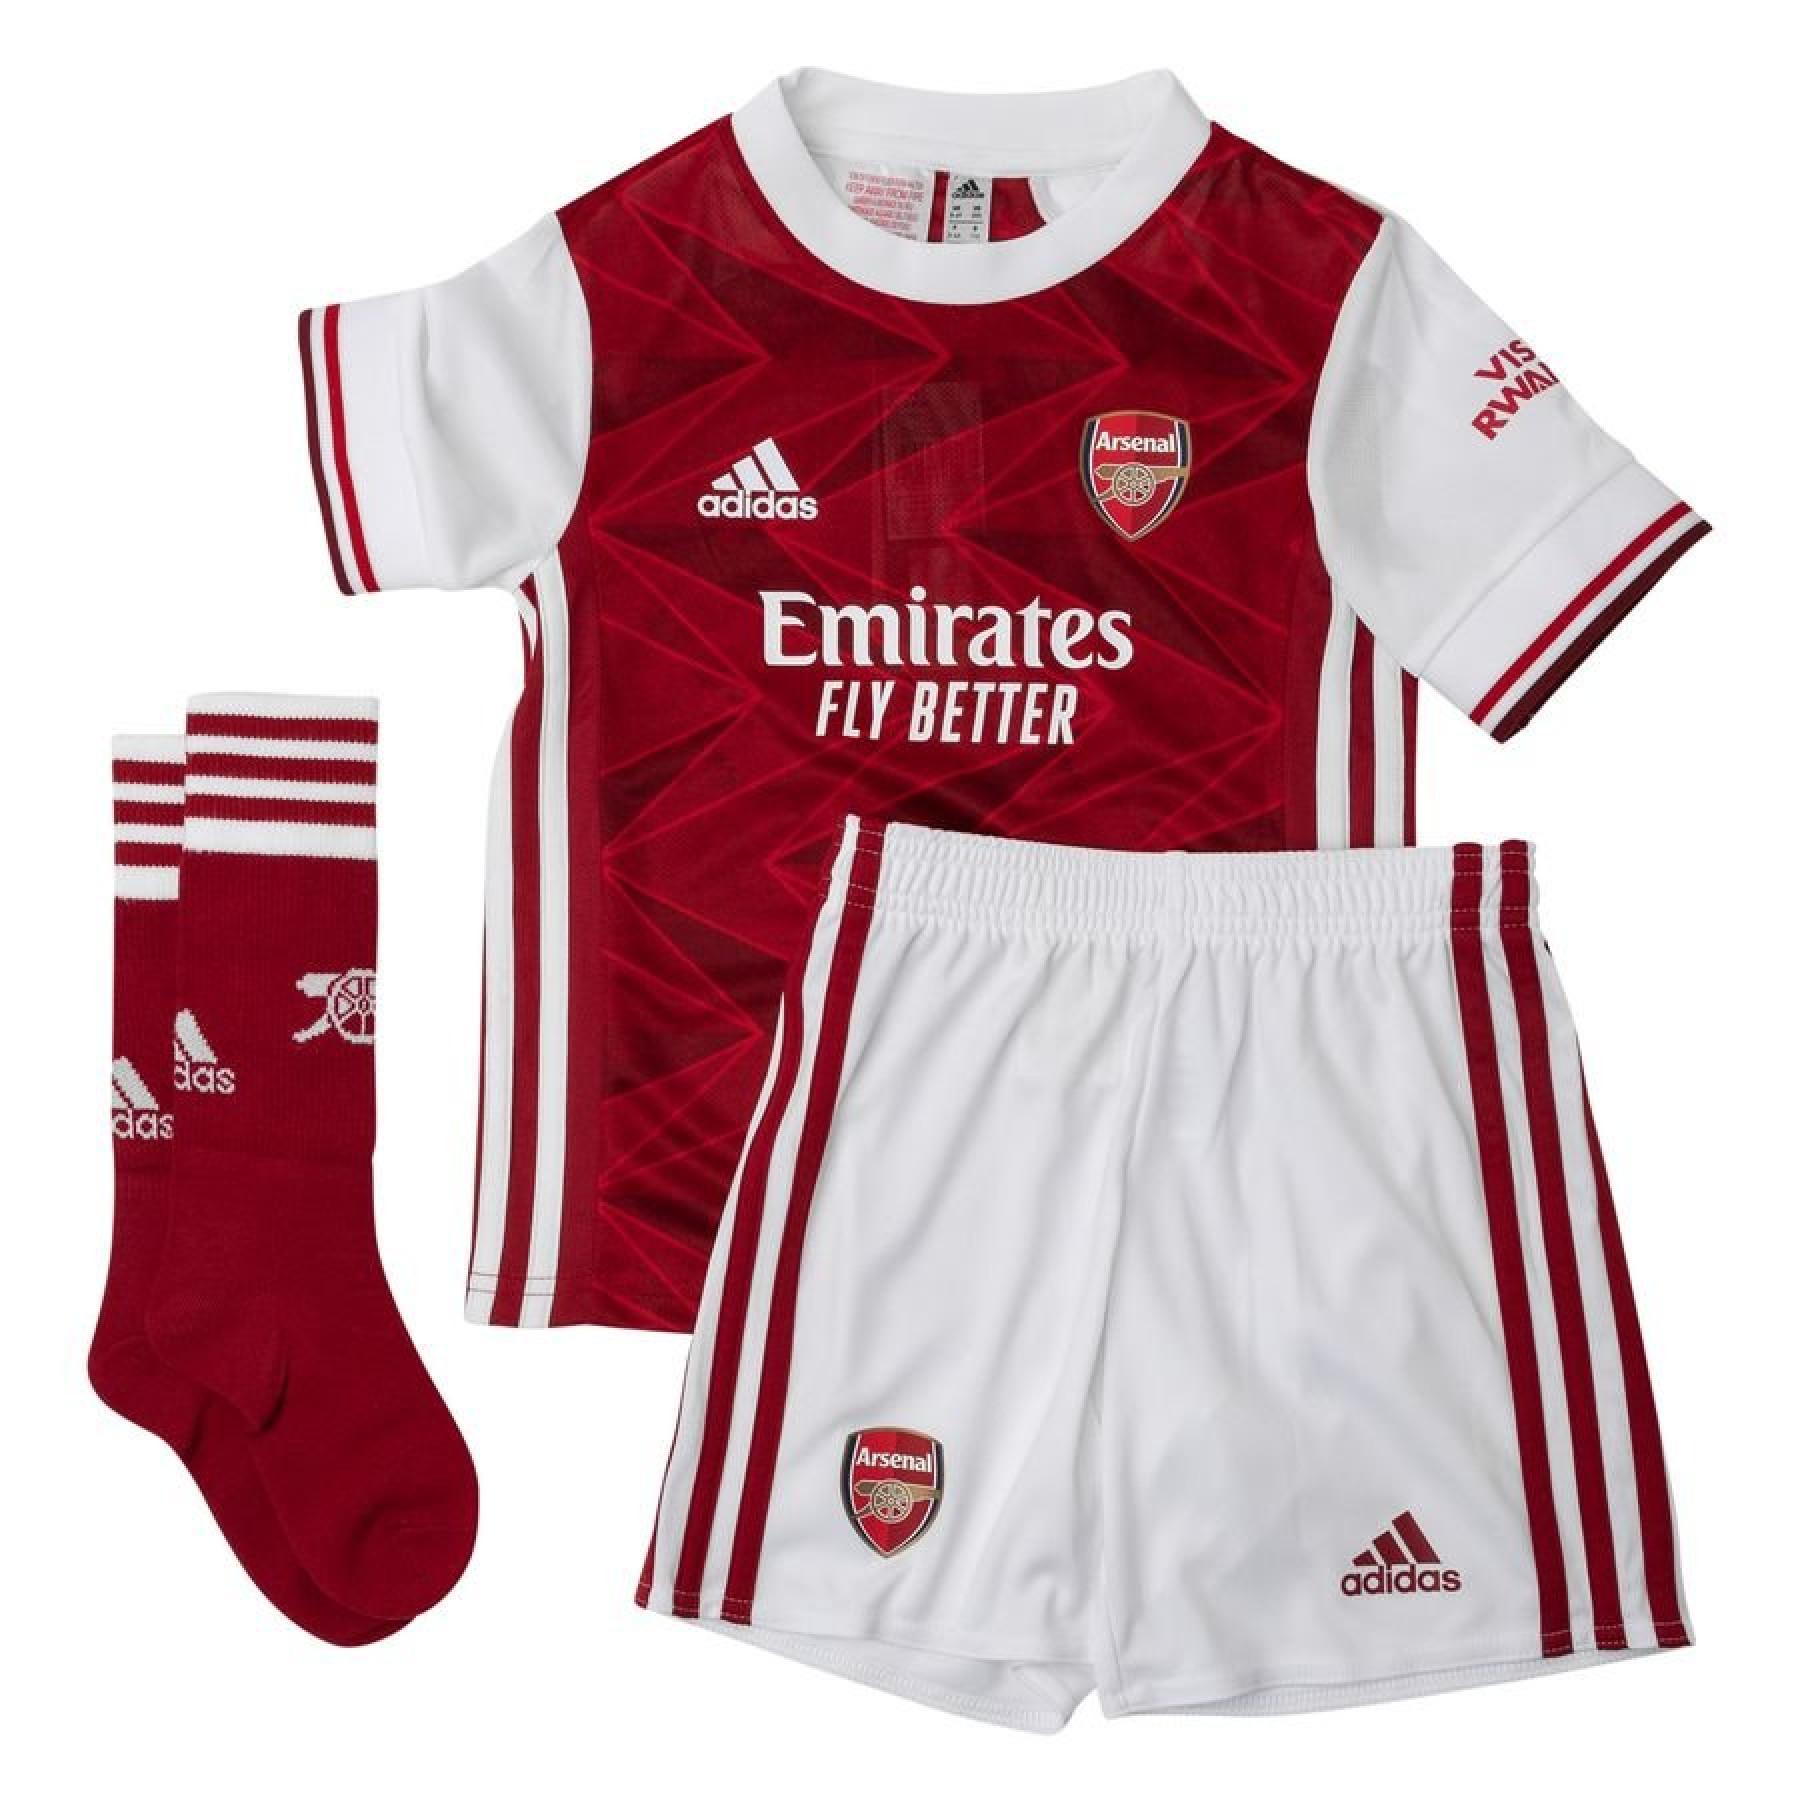 Mini-kit kidshuis Arsenal 2020/21